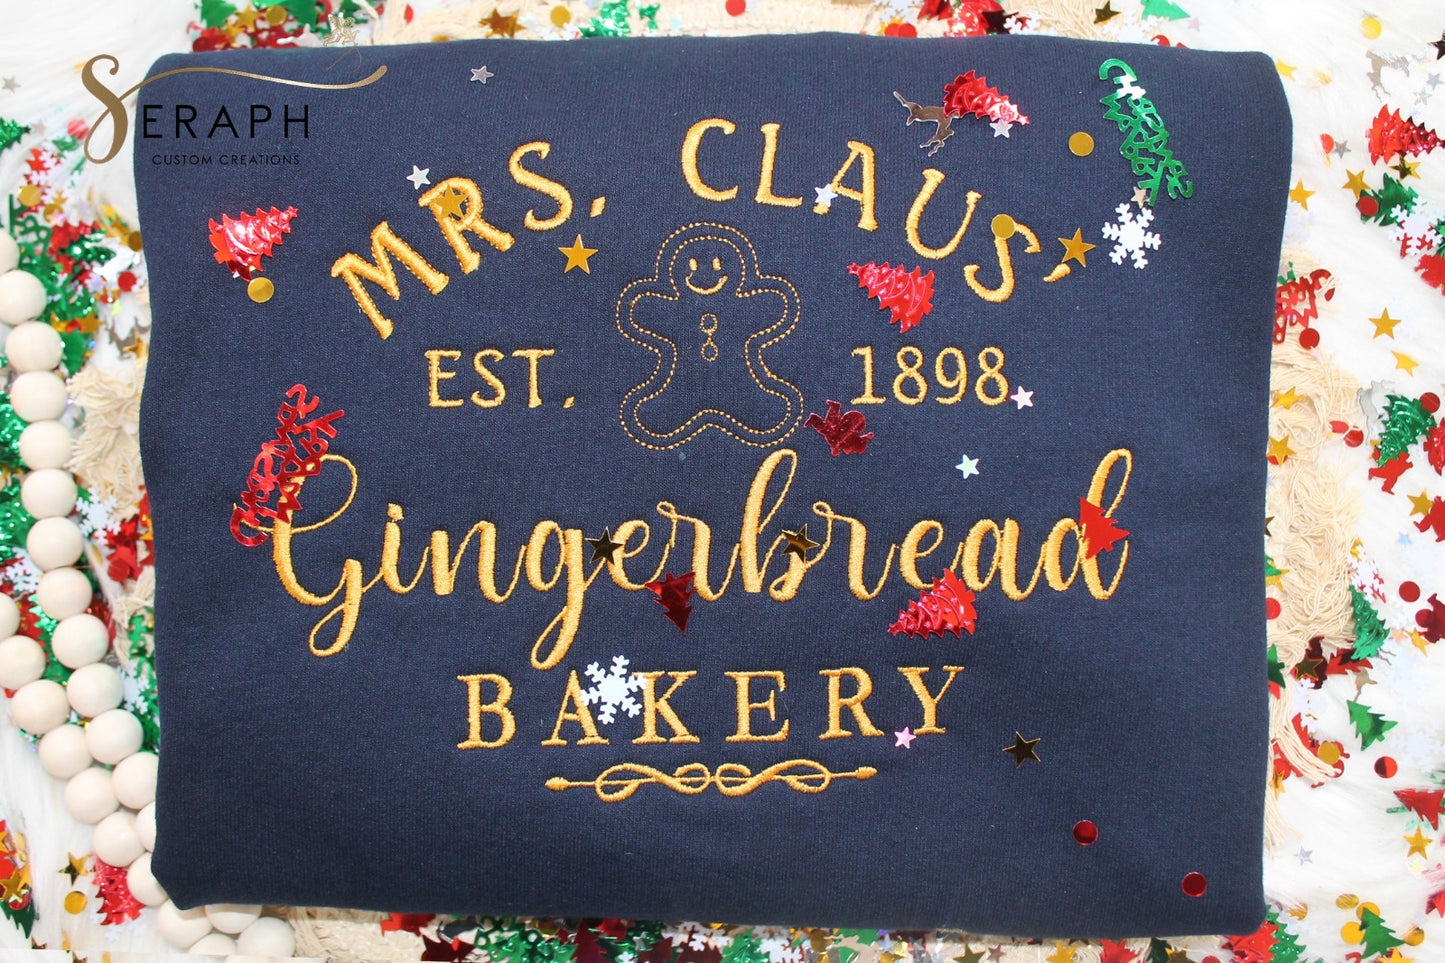 Mrs Claus Gingerbread Bakery Sweatshirt